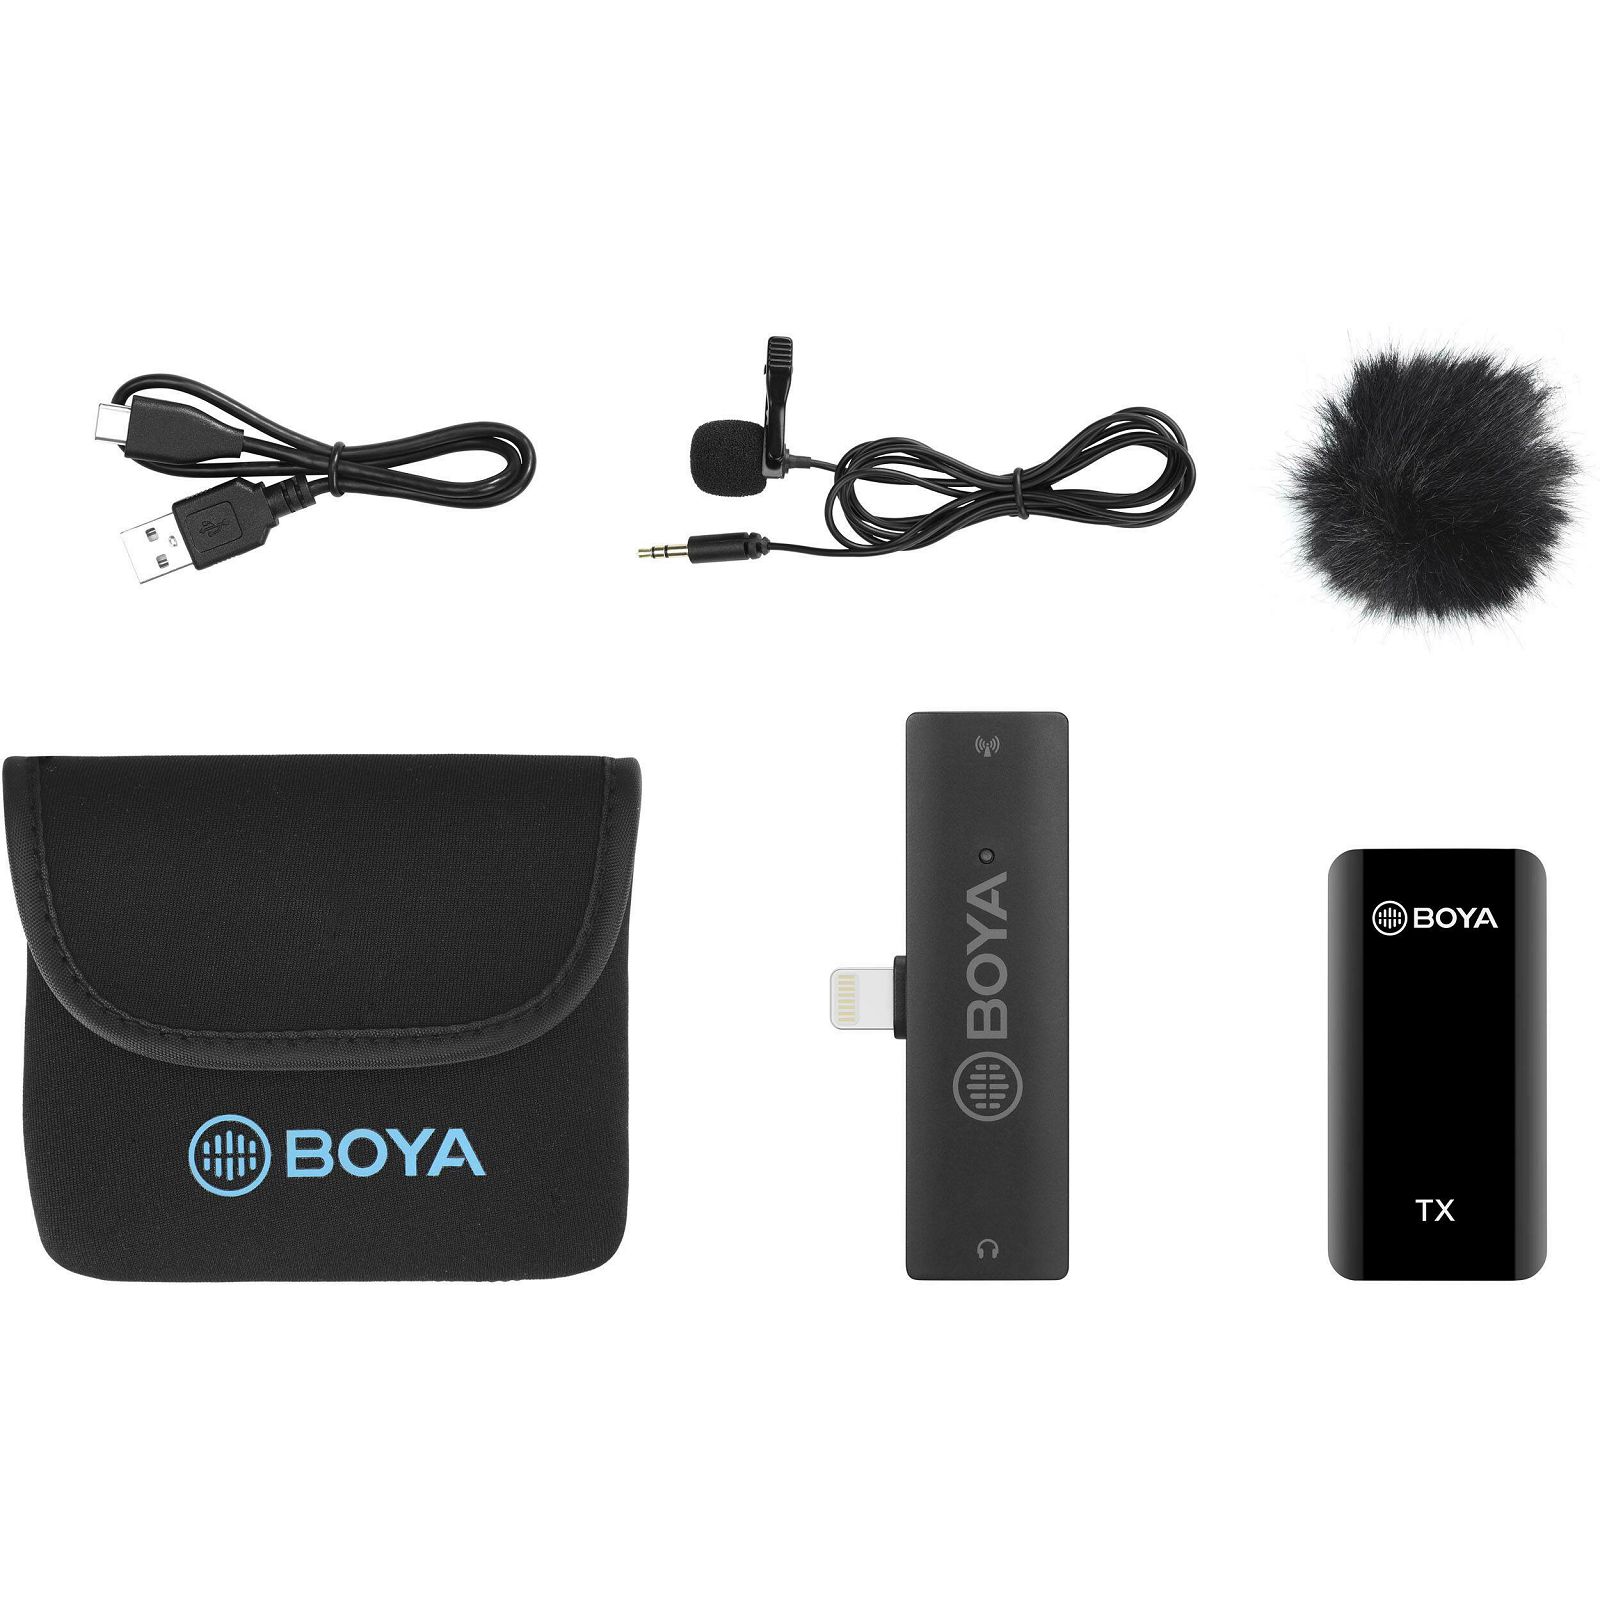 Boya BY-XM6-S3 Wireless Lightning bežični mikrofon za iPhone